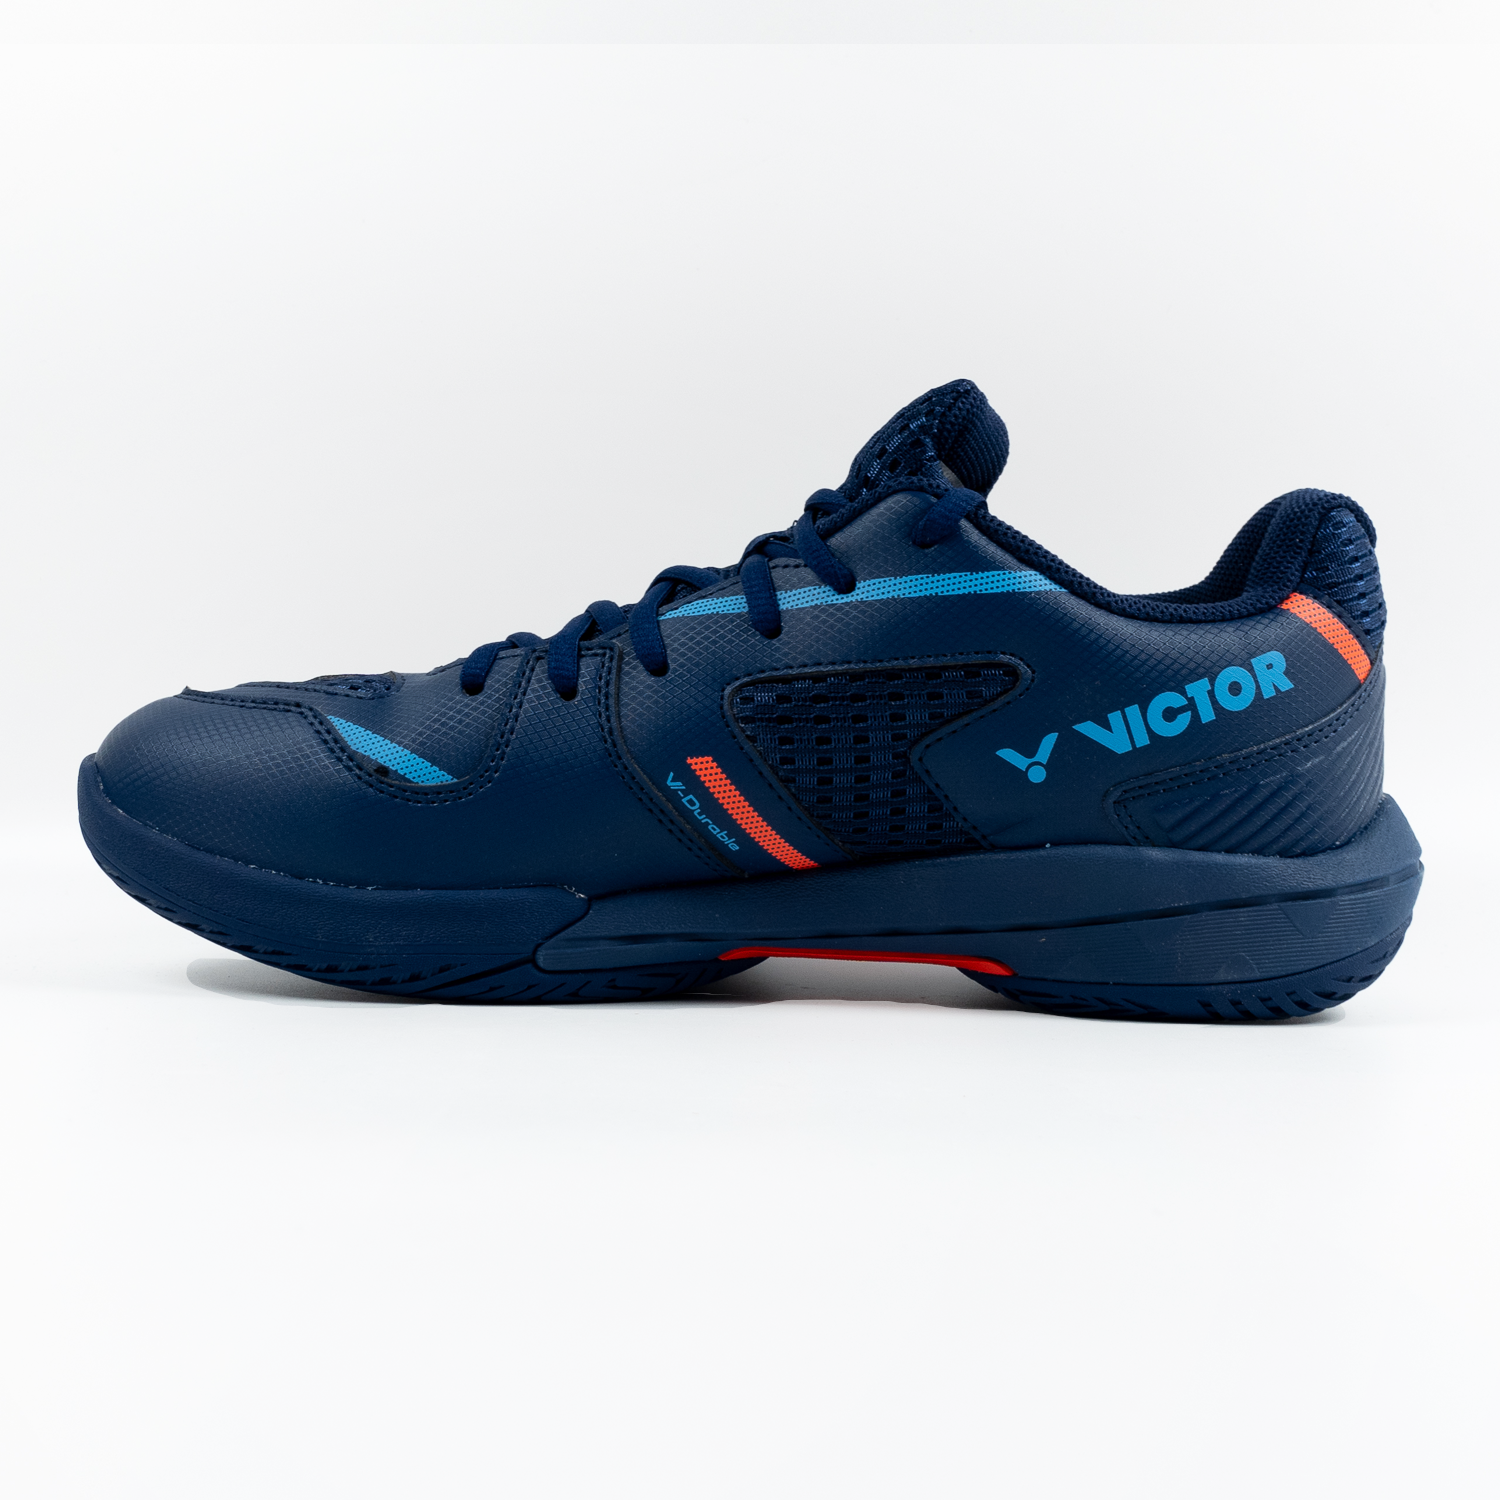 Victor Sport Badminton Court Shoes P6500 B (Dark Navy)